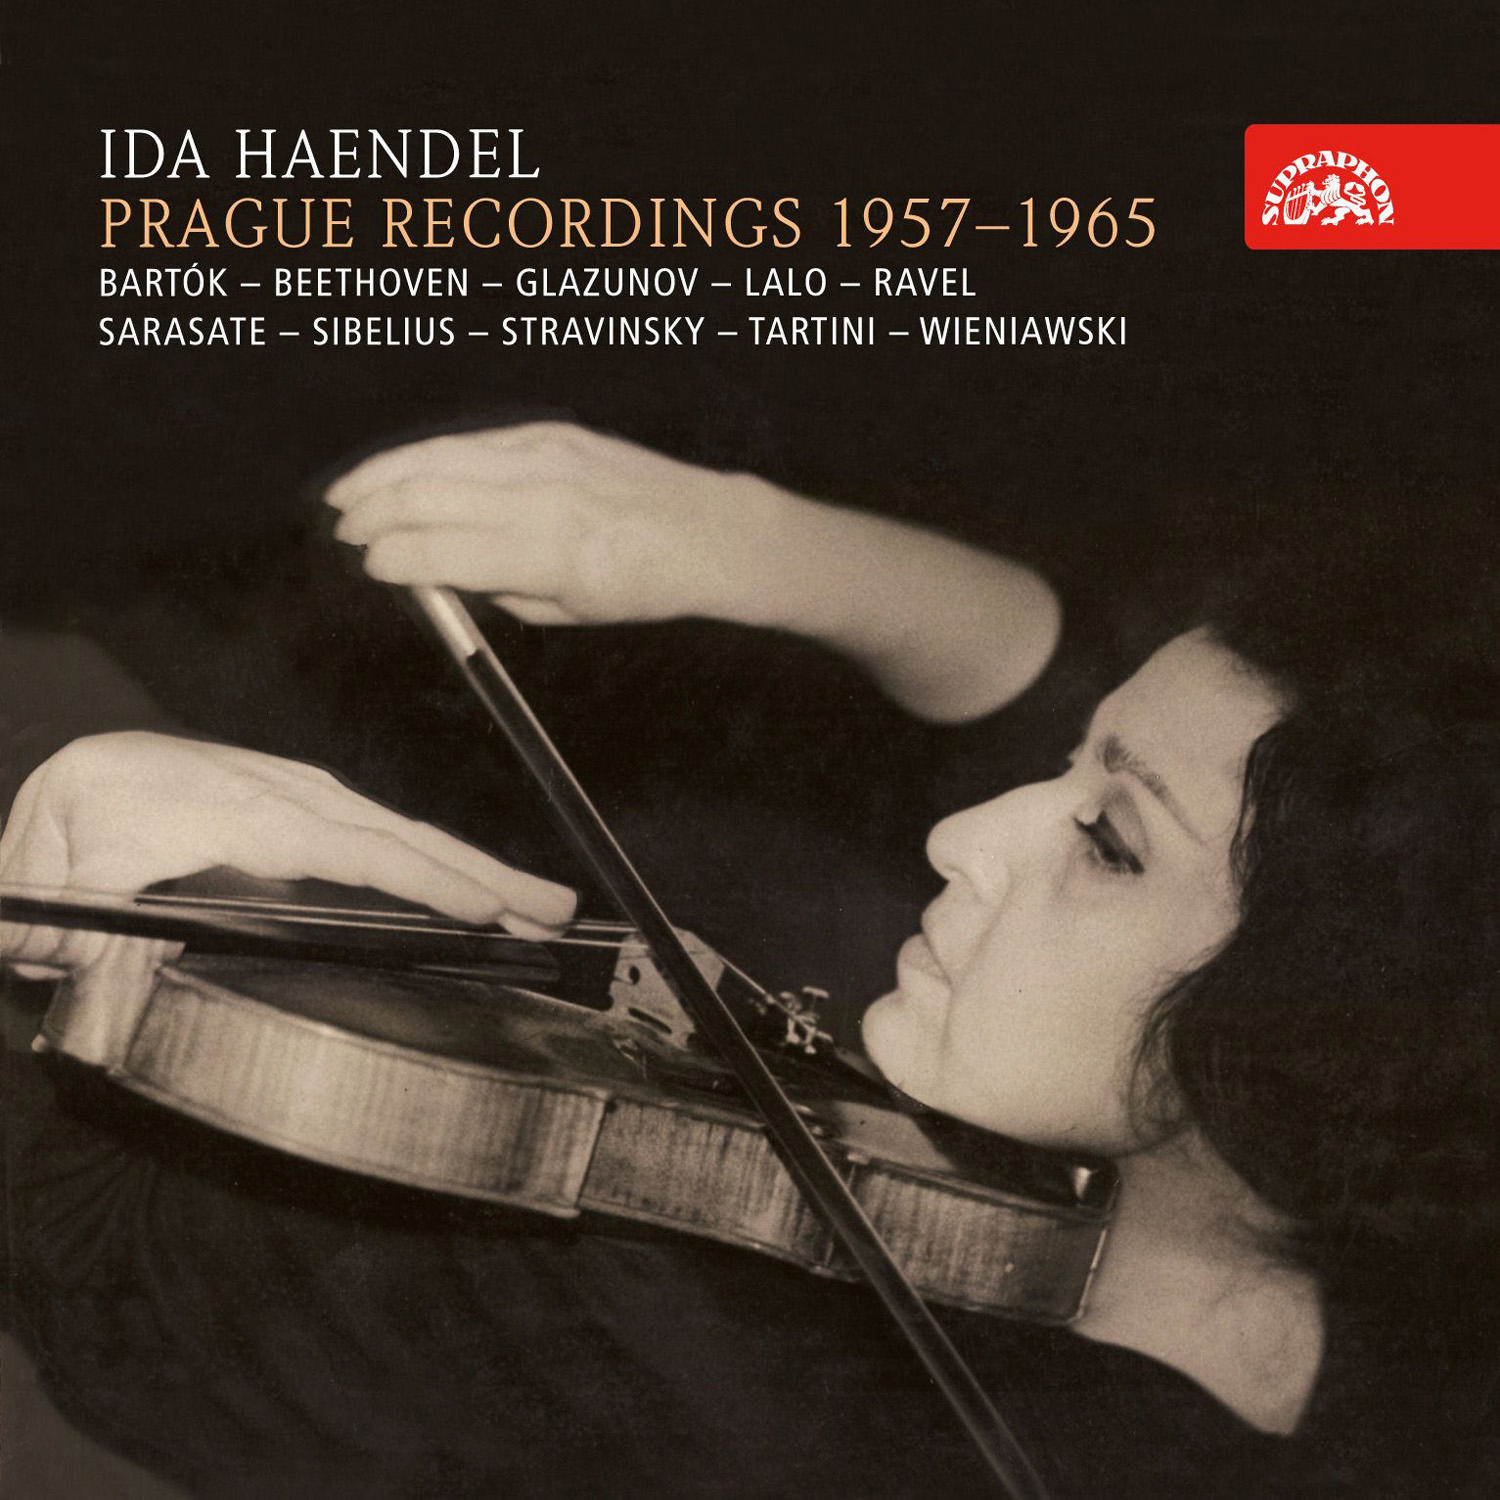 CD Shop - HAENDEL IDA PRAGUE RECORDINGS